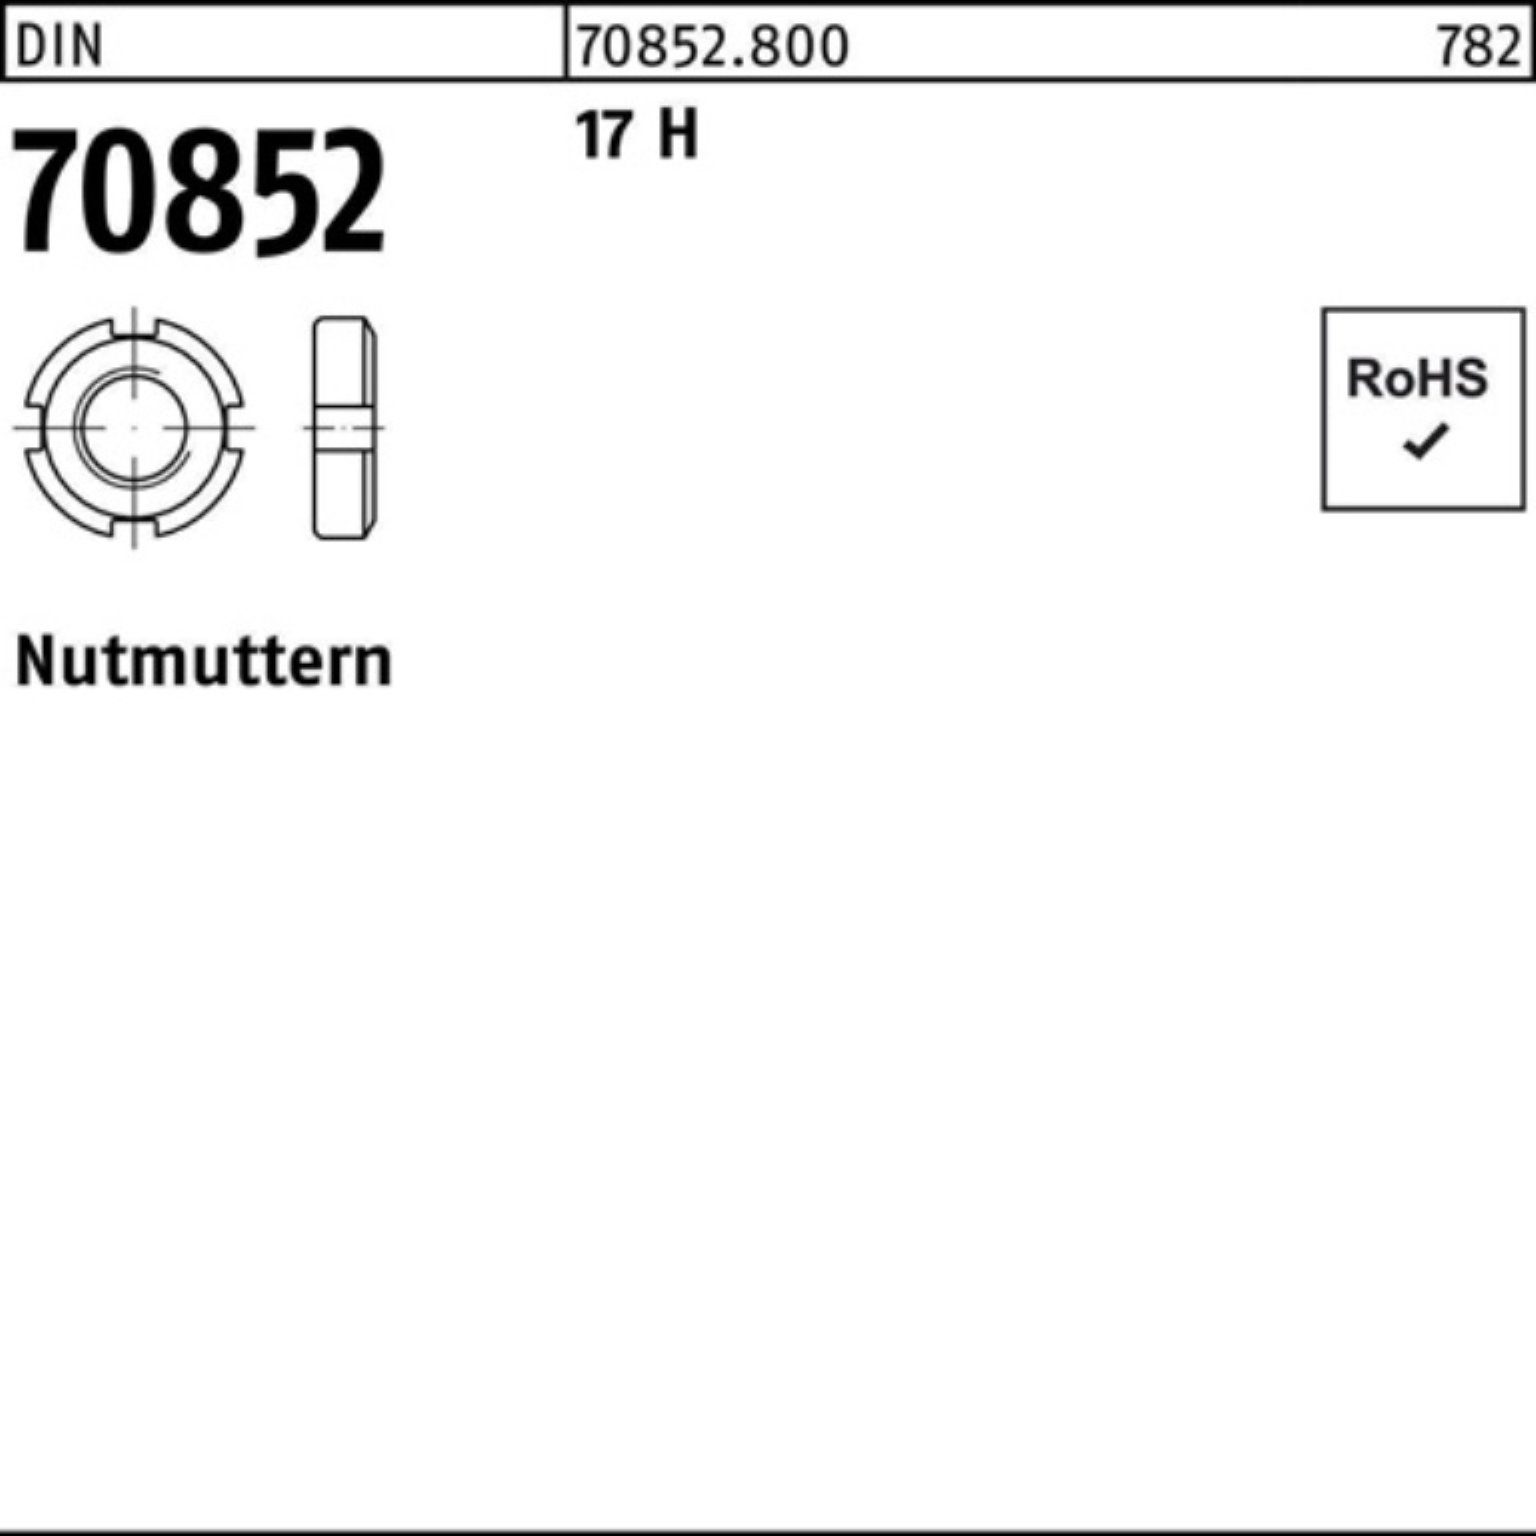 Reyher Nutmutter 100er Pack Nutmutter DIN 70852 M75x 1,5 17 H 1 Stück DIN 70852 17 H N | Muttern